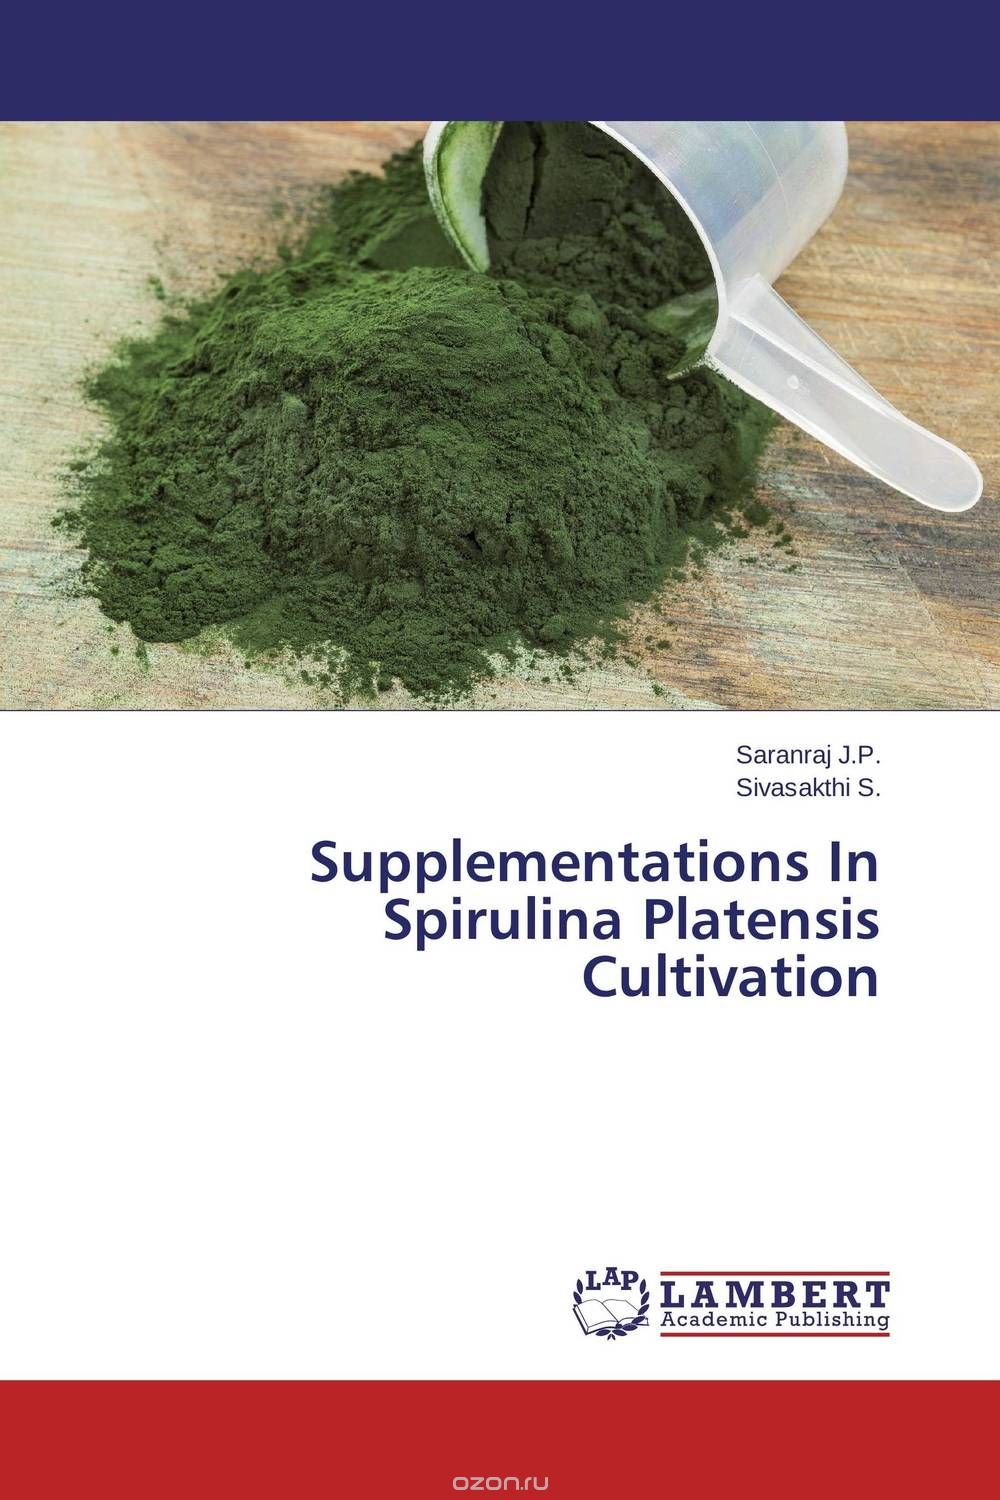 Supplementations In Spirulina Platensis Cultivation